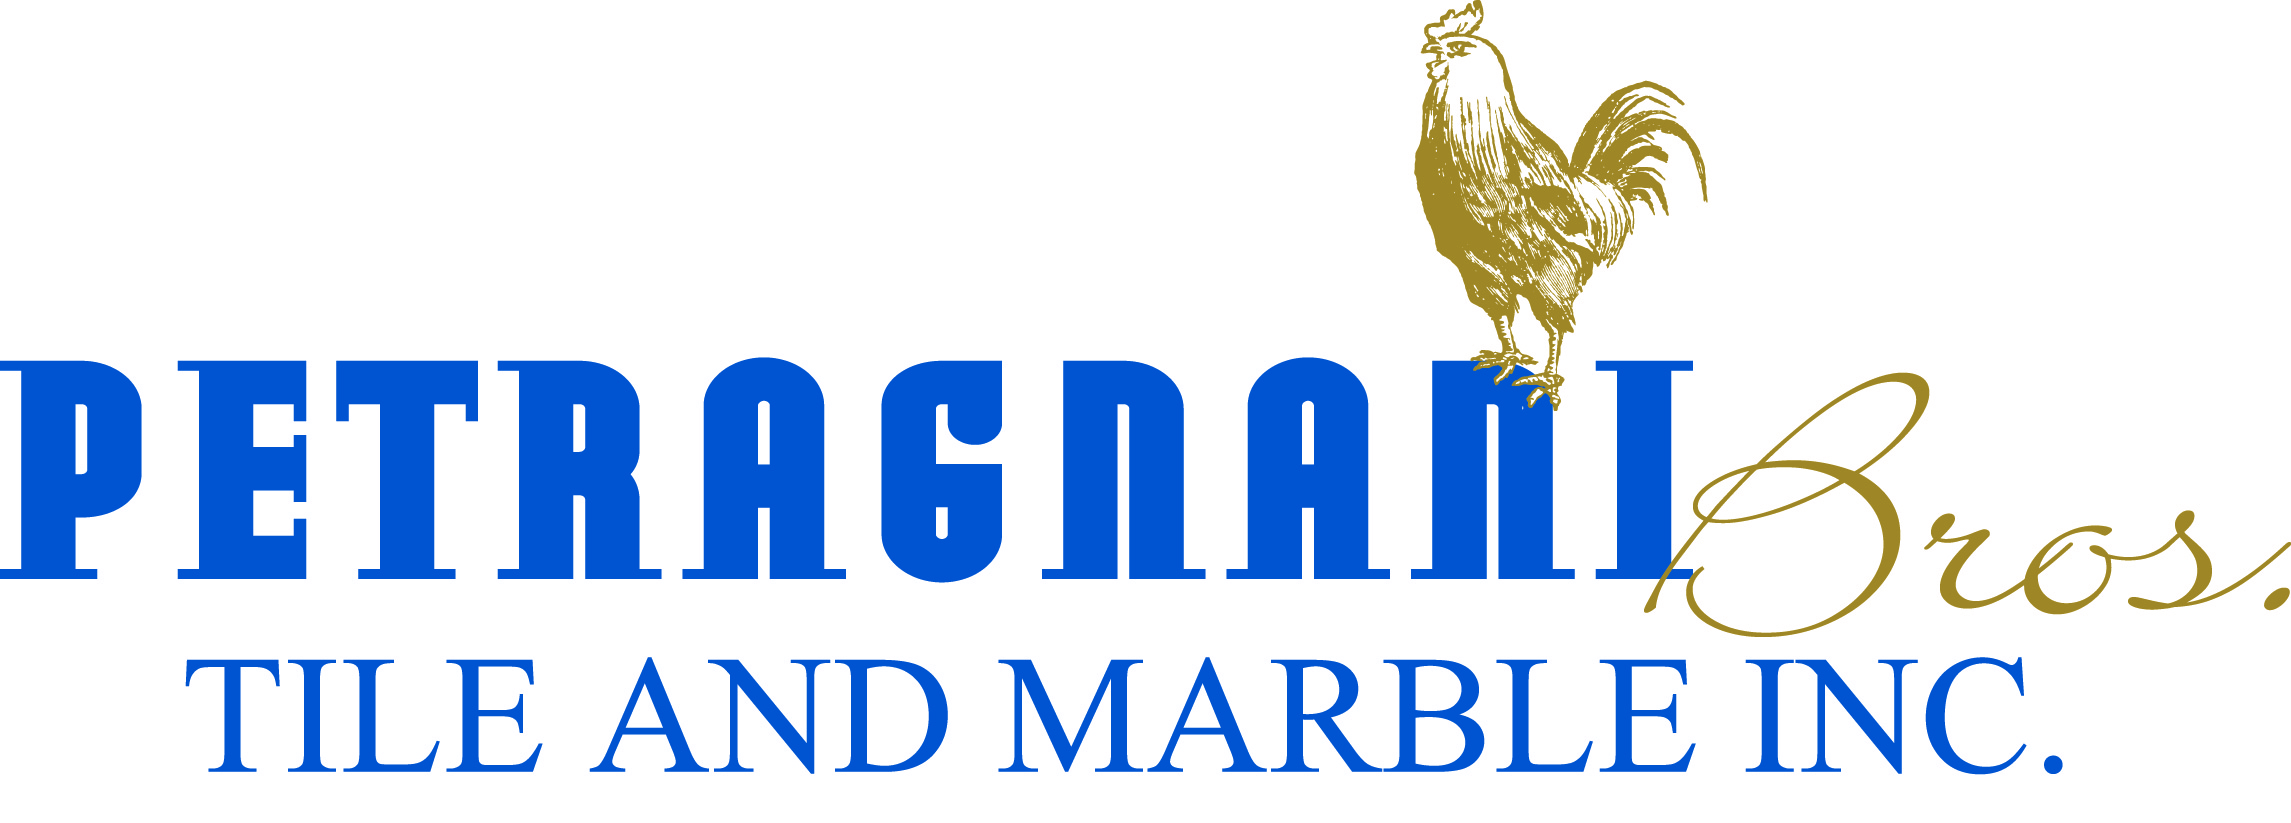 Petragnani Brothers Tile & Marble Inc.